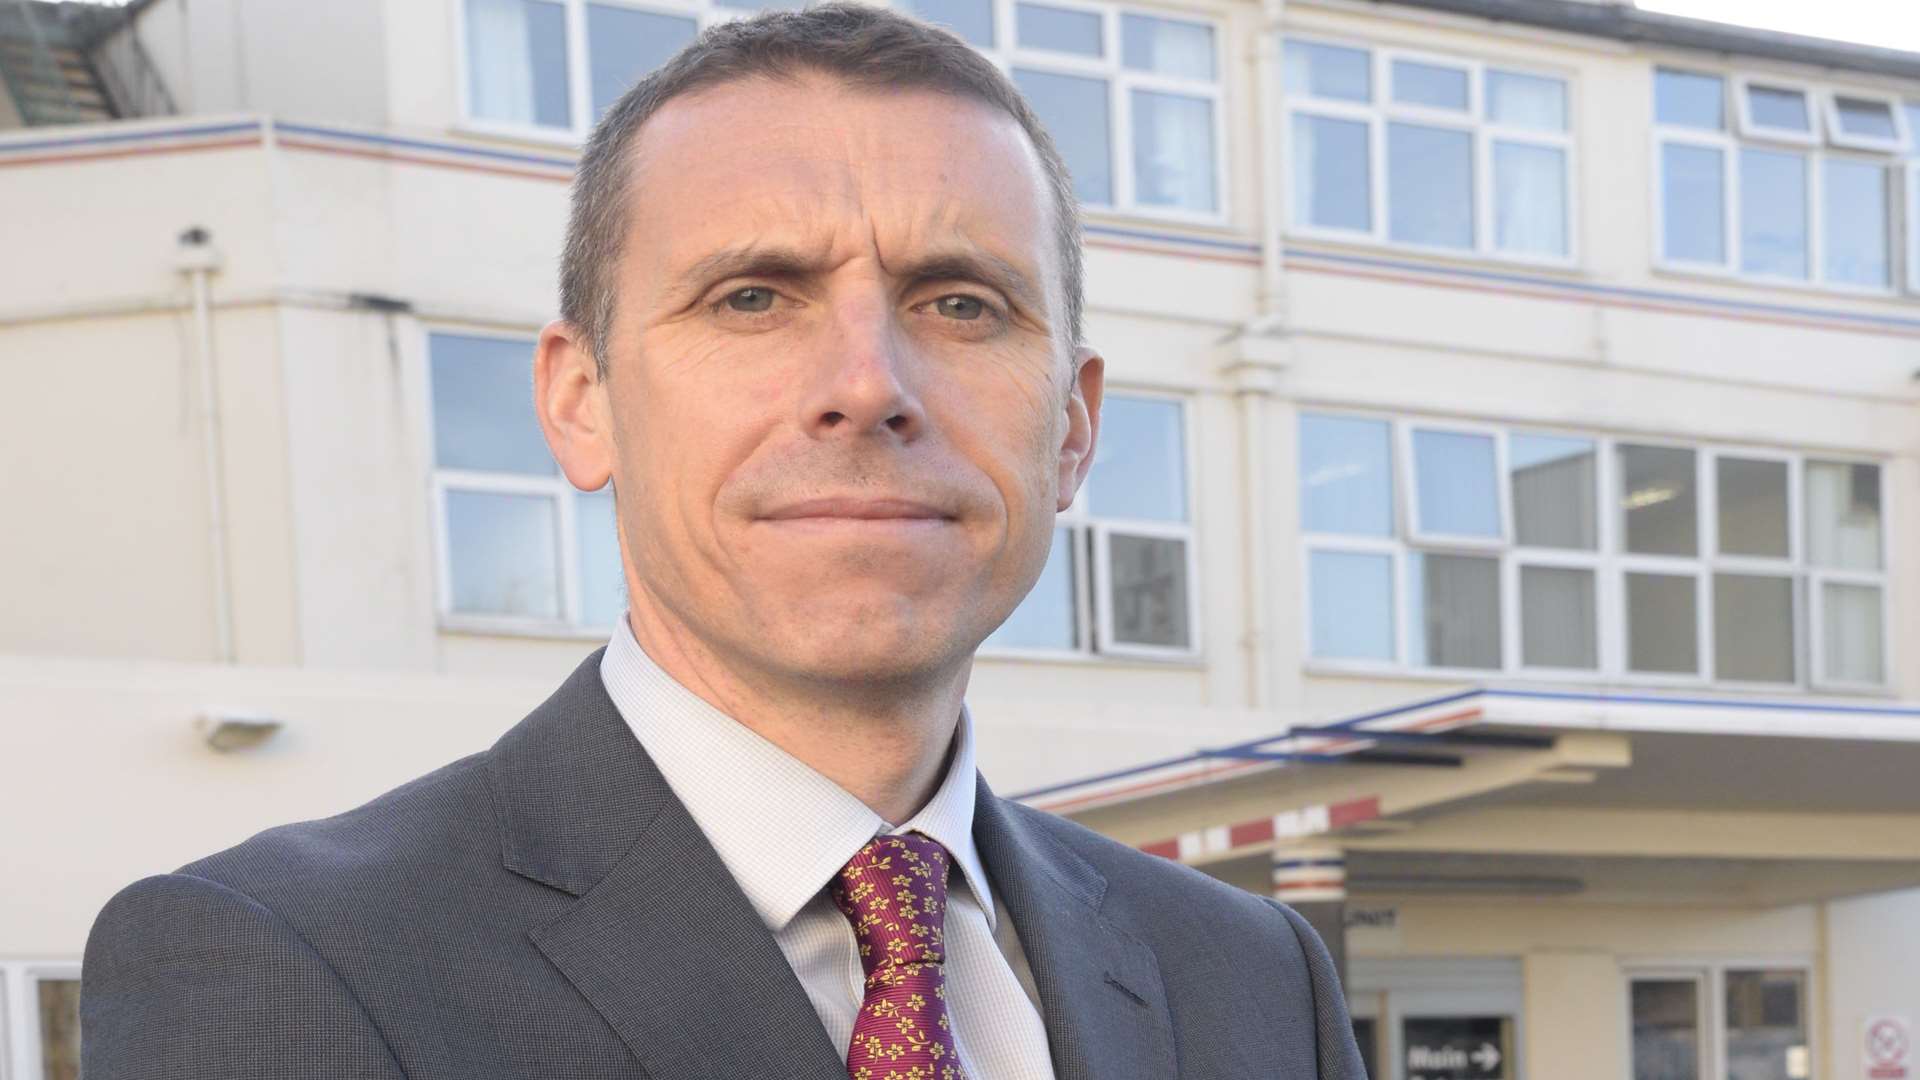 East Kent Hospitals Trust chief executive Matthew Kershaw